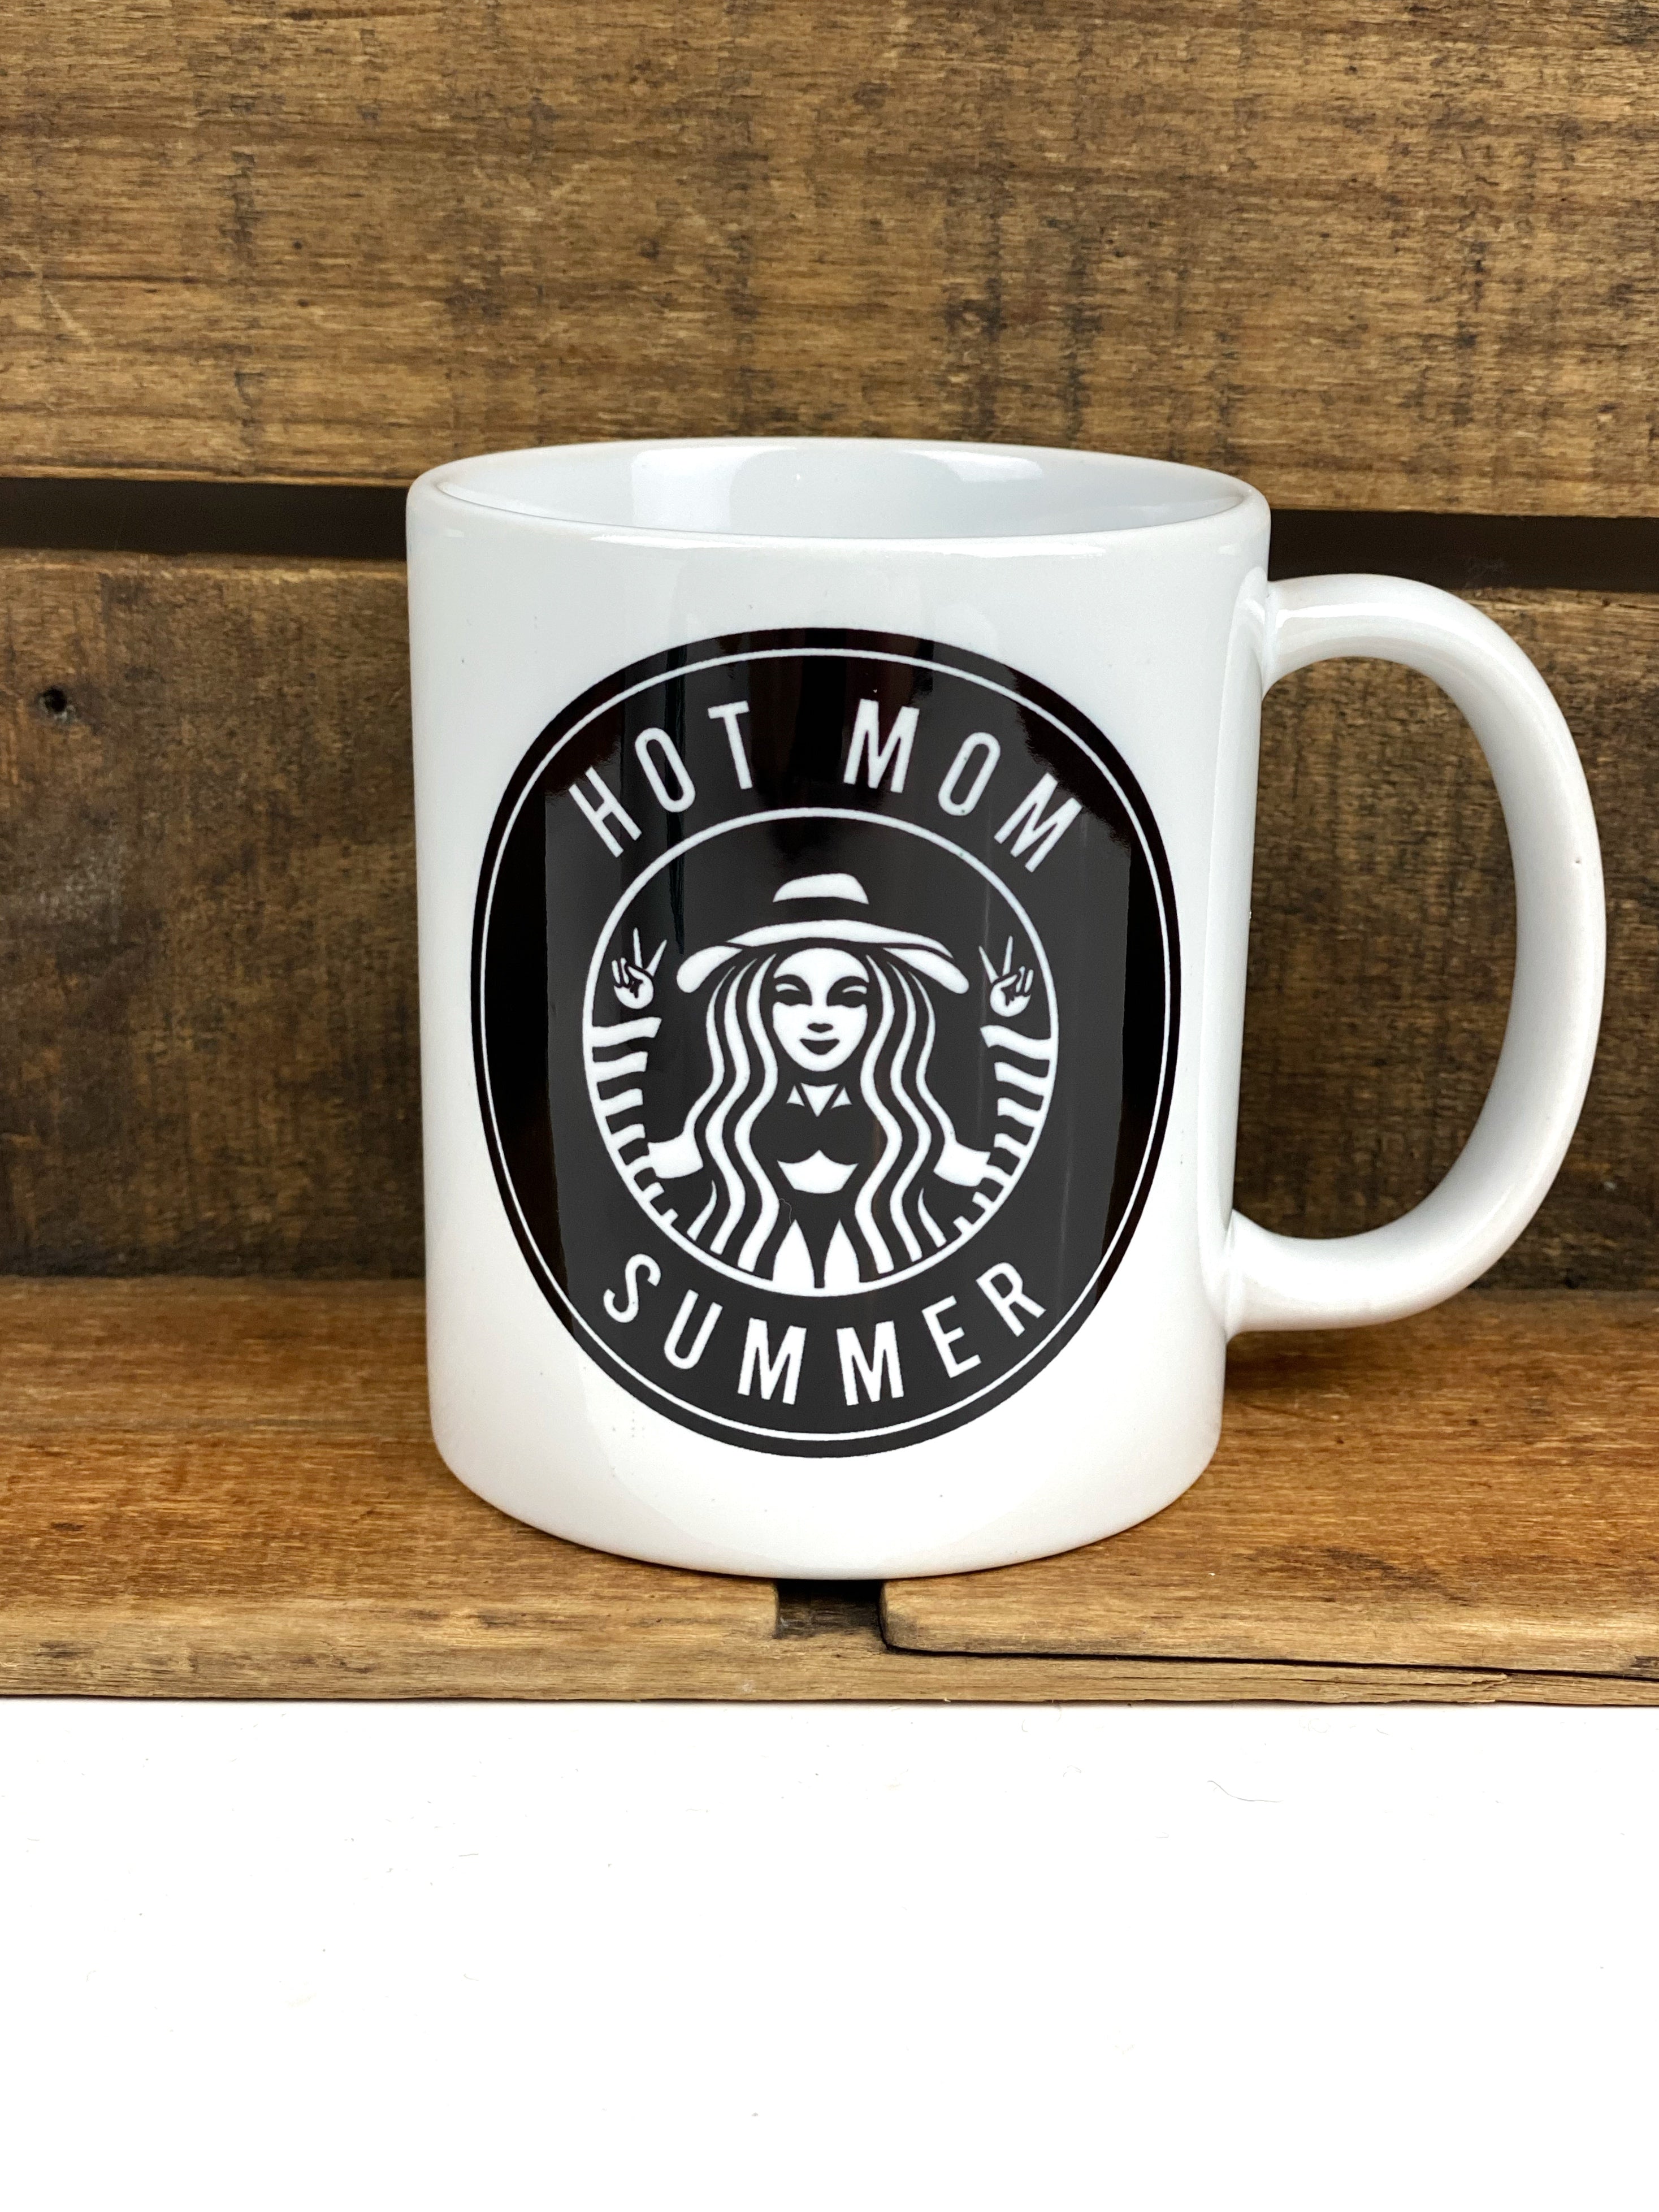 Hot Mom Summer Starbucks Inspired Ceramic Mug Sublimation Coffee Tea Cup